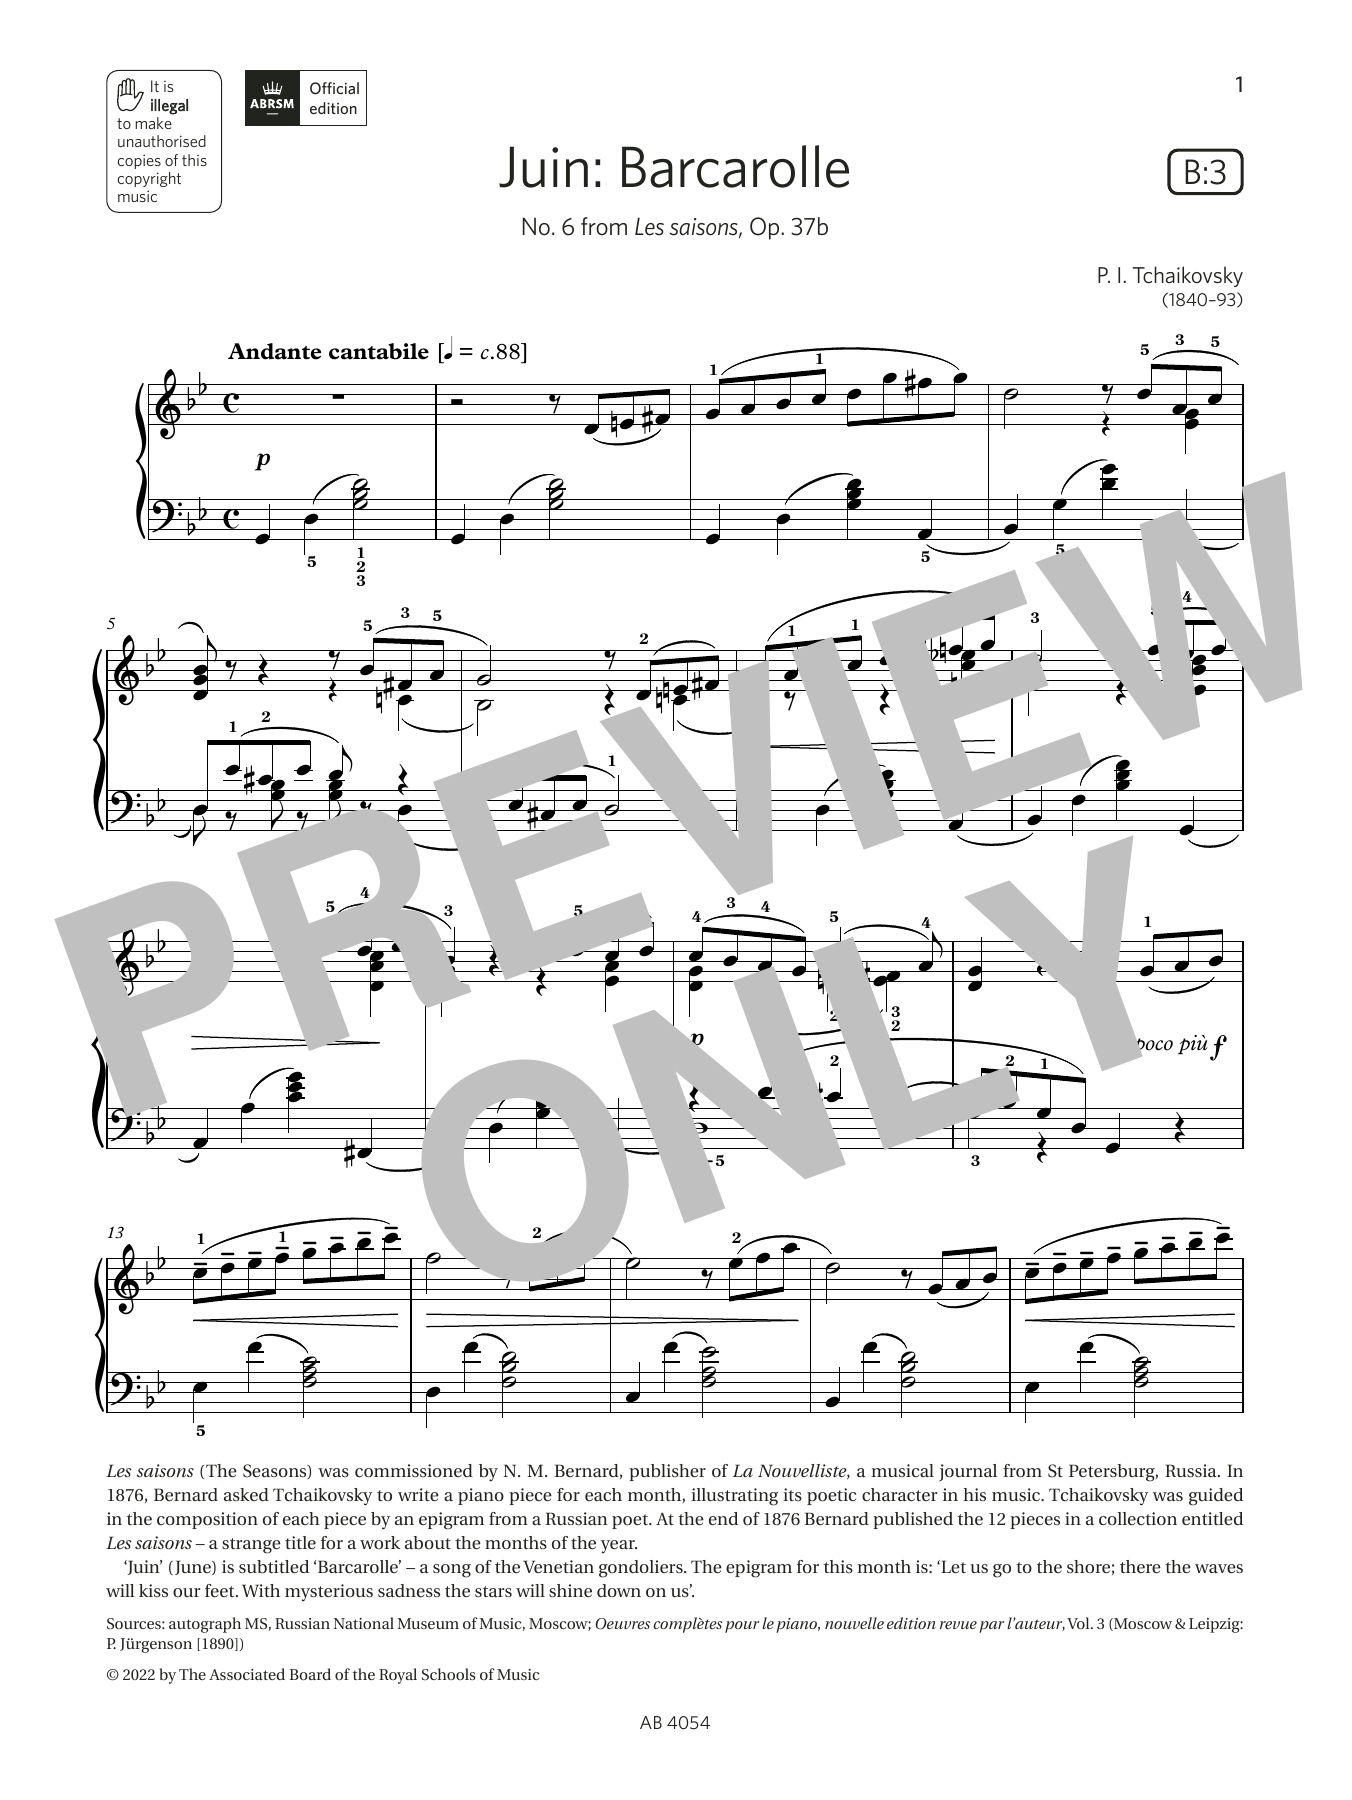 Download Pyotr Il'yich Tchaikovsky Juin: Barcarolle (Grade 8, list B3, fro Sheet Music